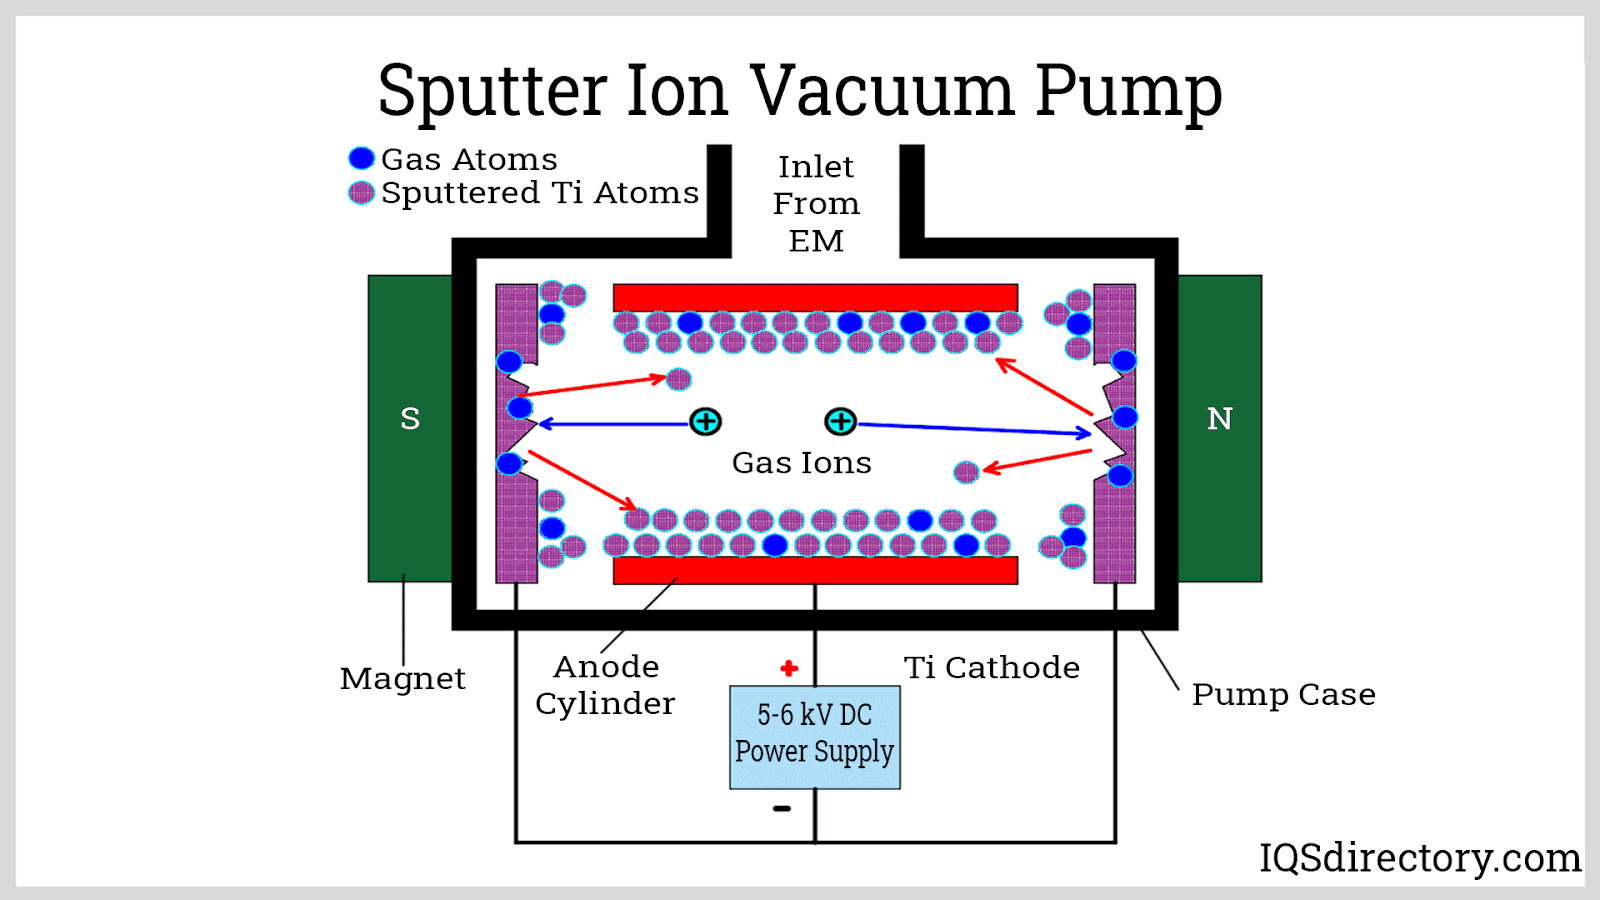 Sputter Ion Vacuum Pump